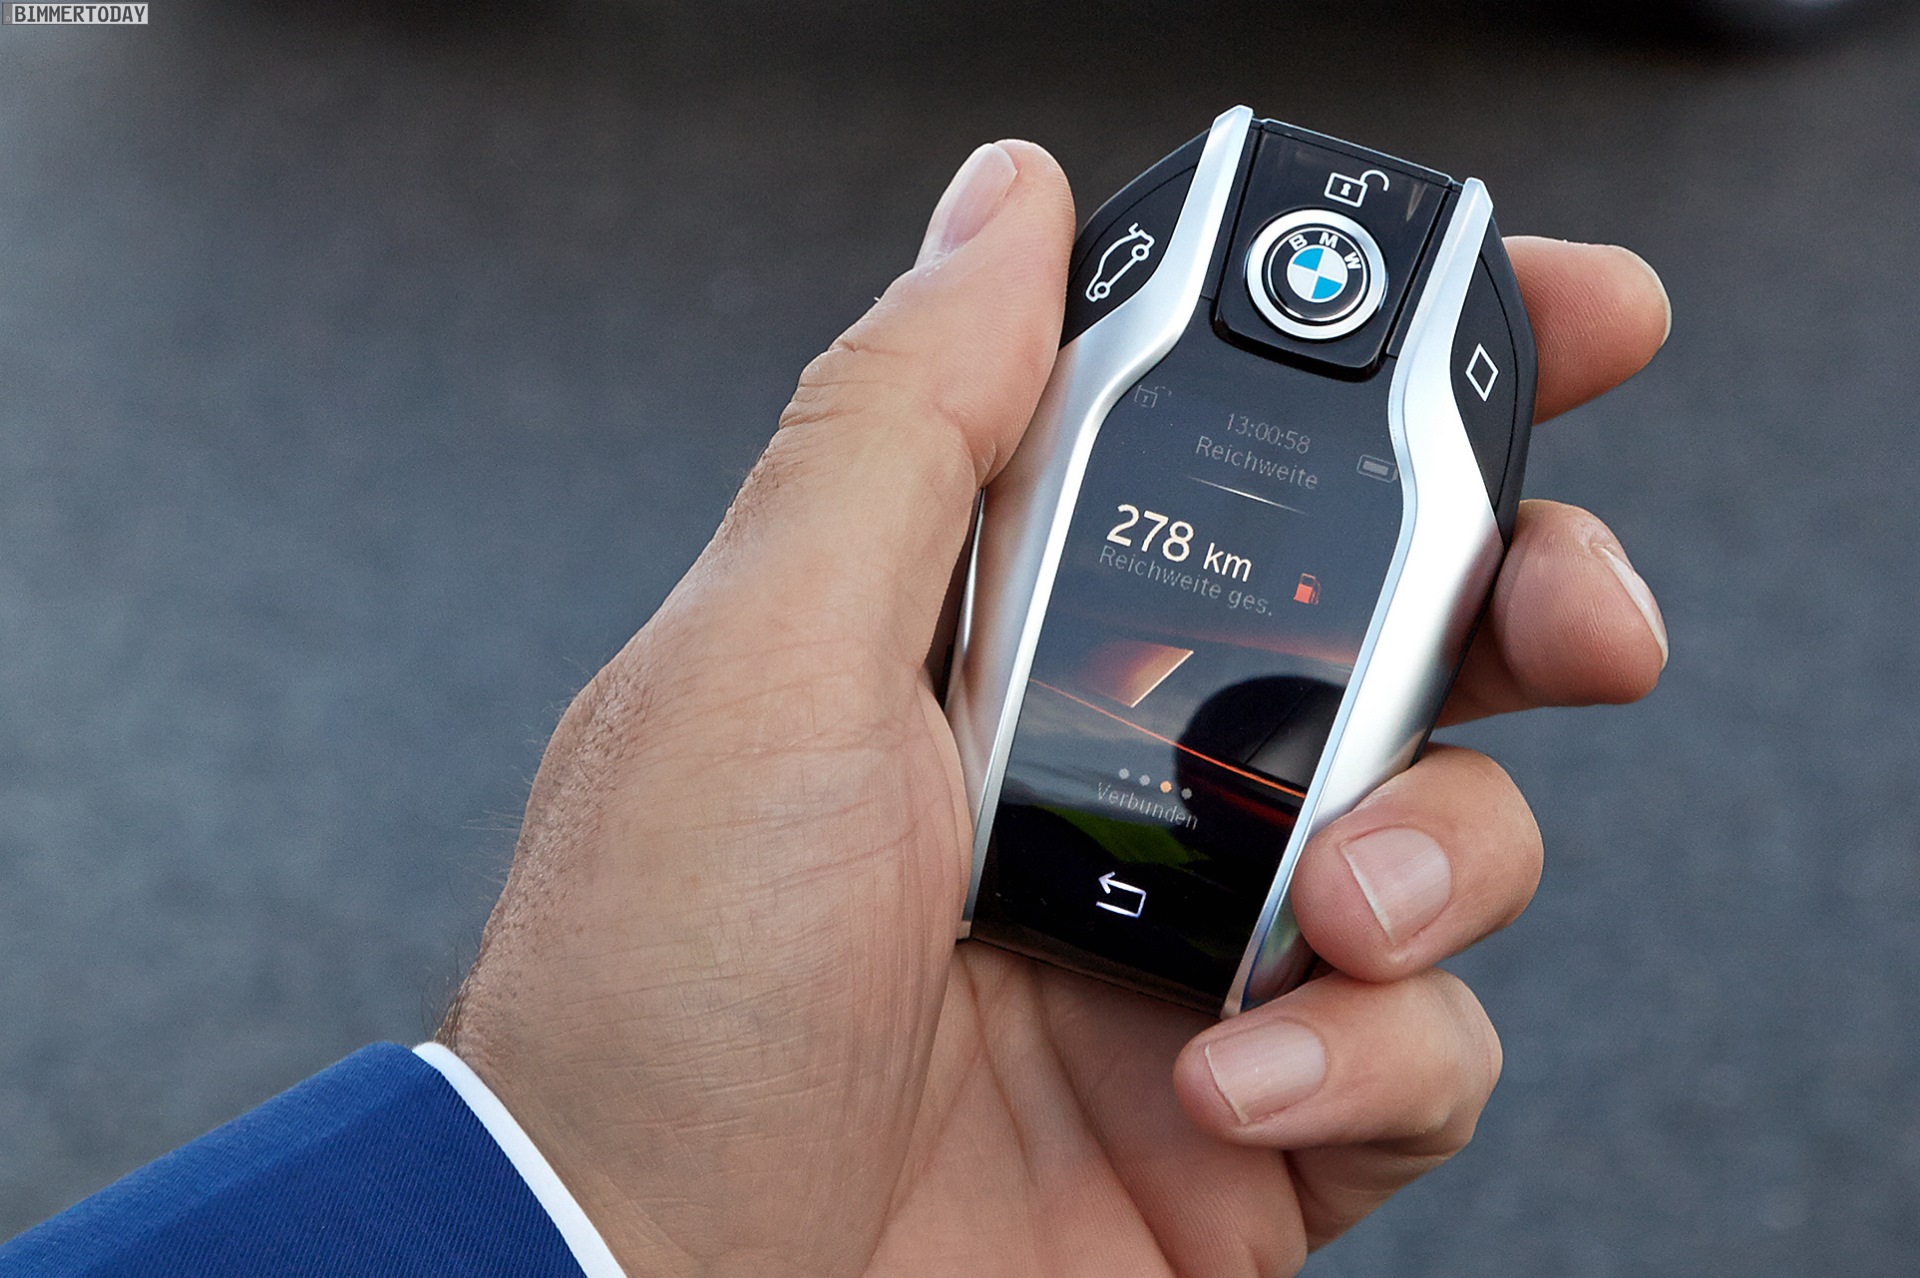 https://cdn.bimmertoday.de/wp-content/uploads/2015/06/BMW-7er-2015-Display-Key-Autoschluessel-Smartkey-04.jpg